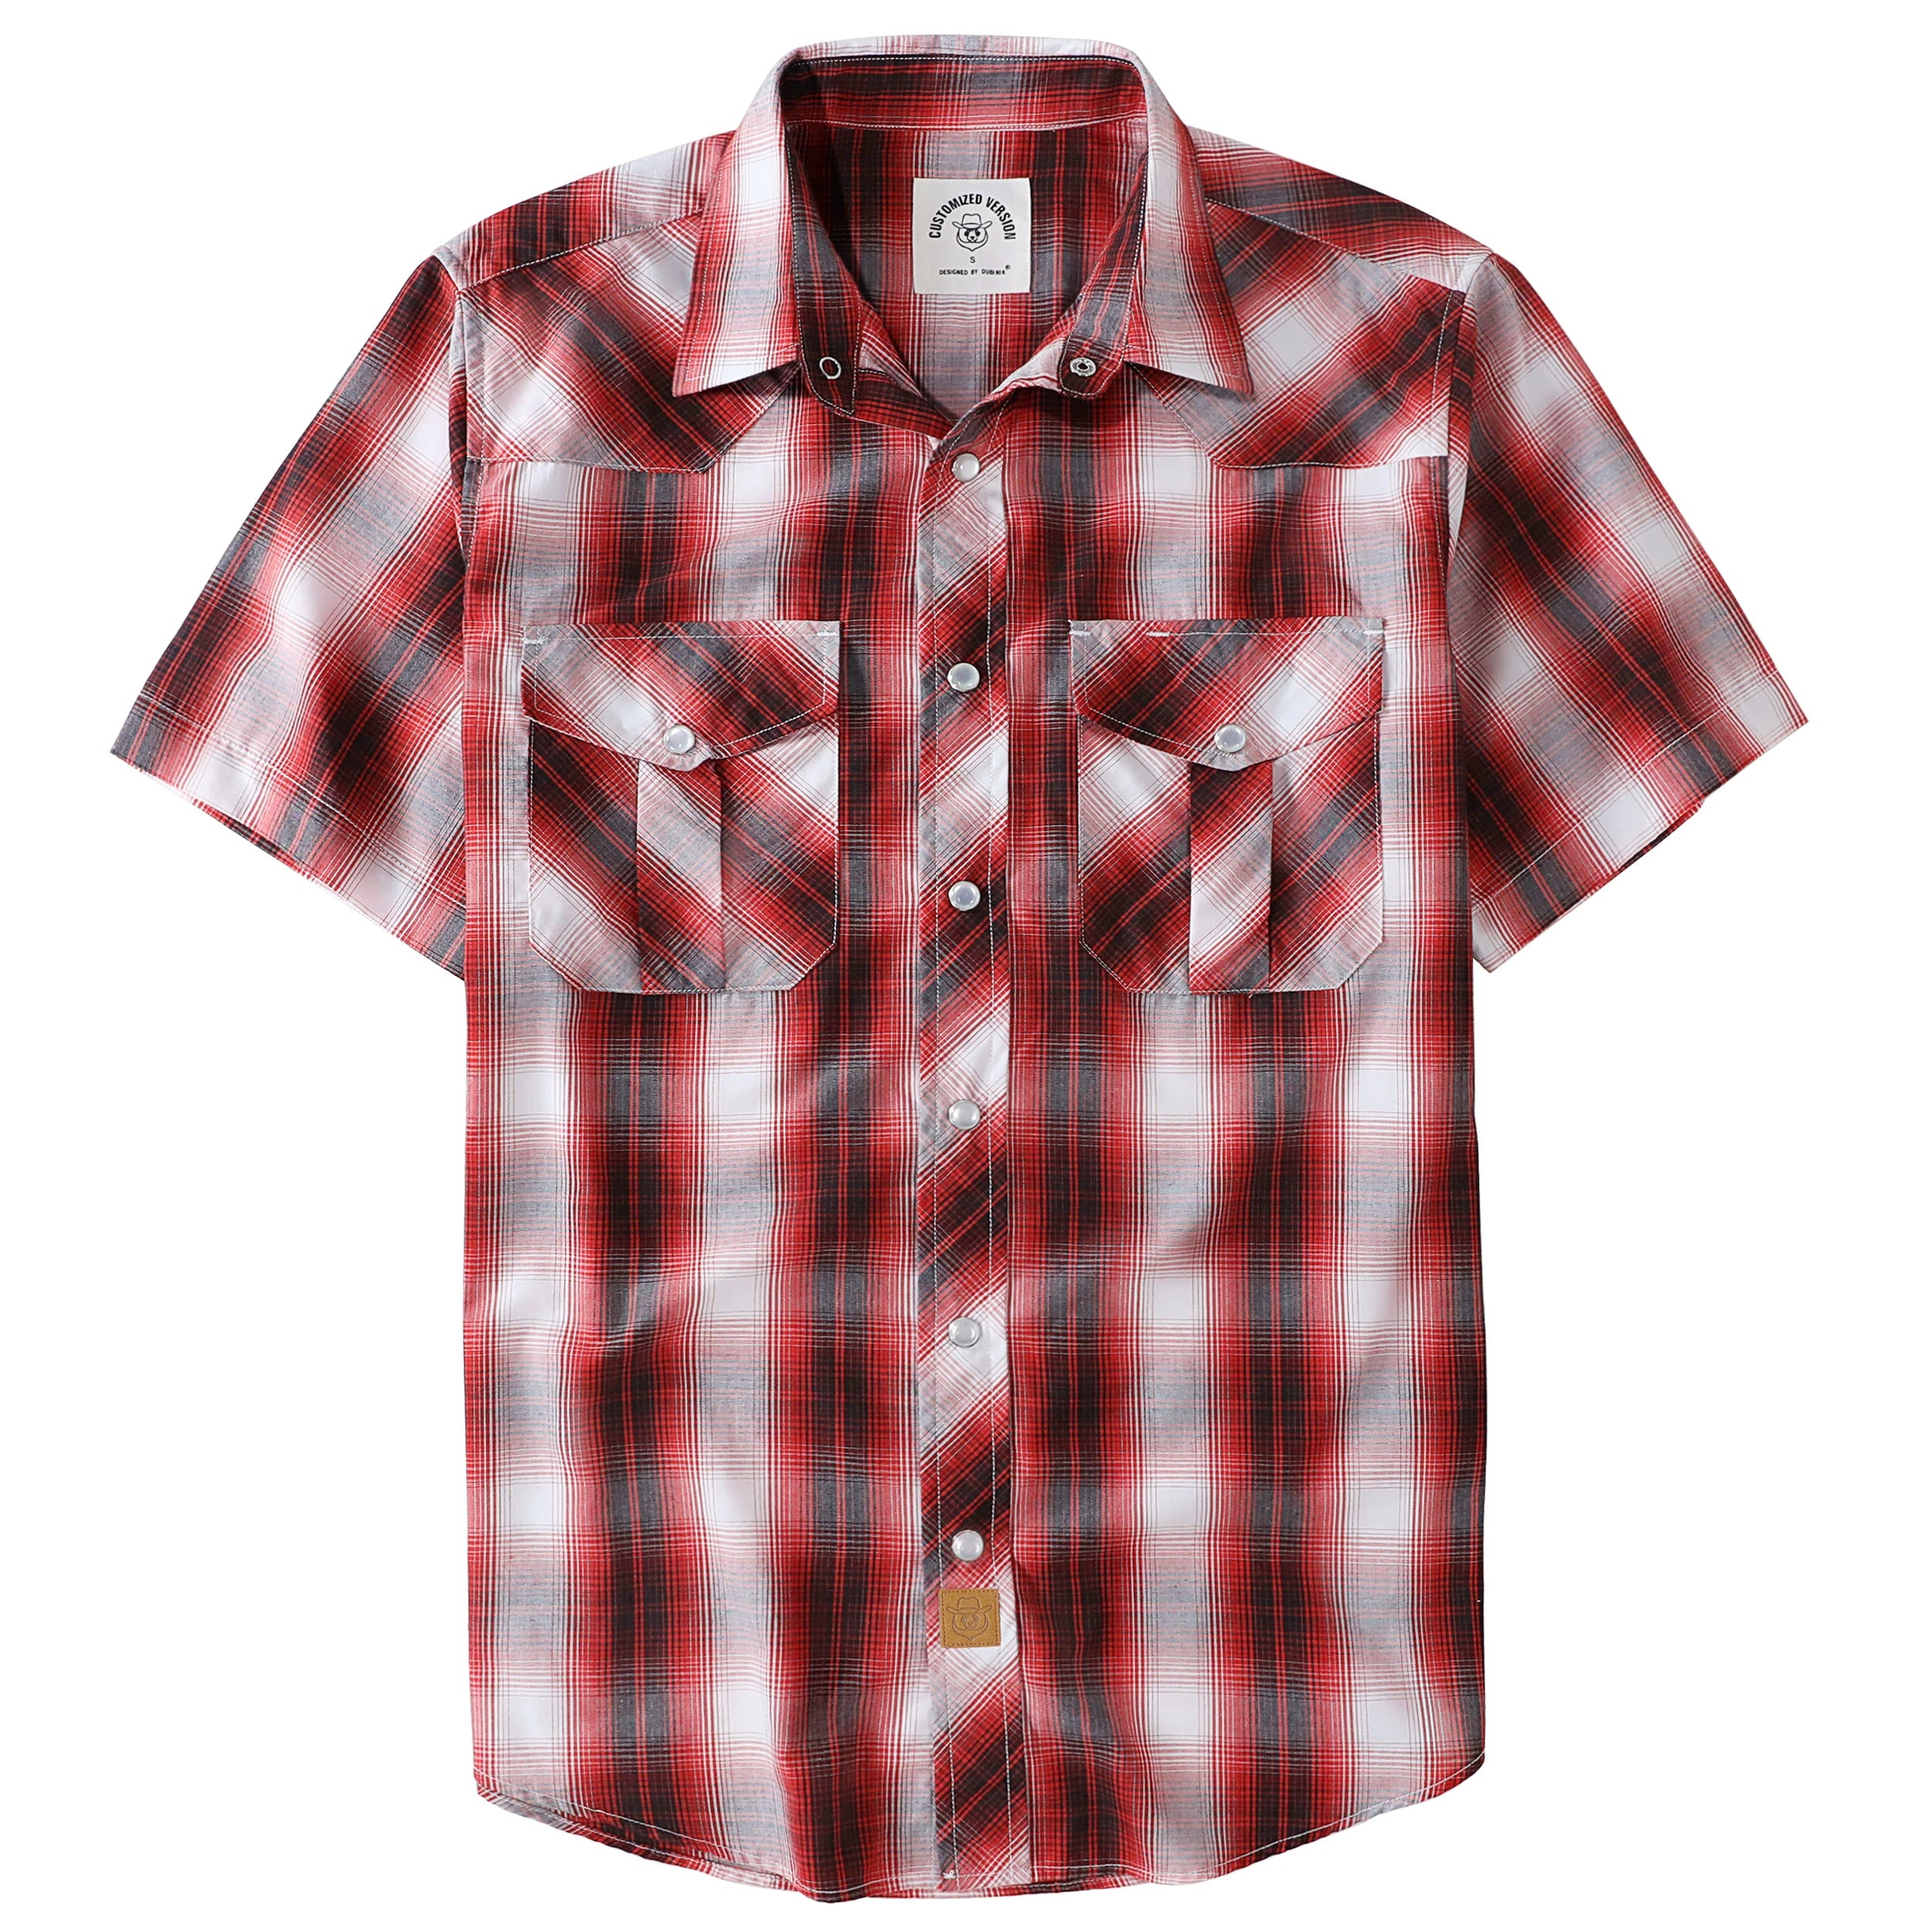 Dubinik® Western Shirts for Men Short Sleeve Plaid Pearl Snap Shirts for Men Button Up Shirt Cowboy Casual Work Shirt#41028